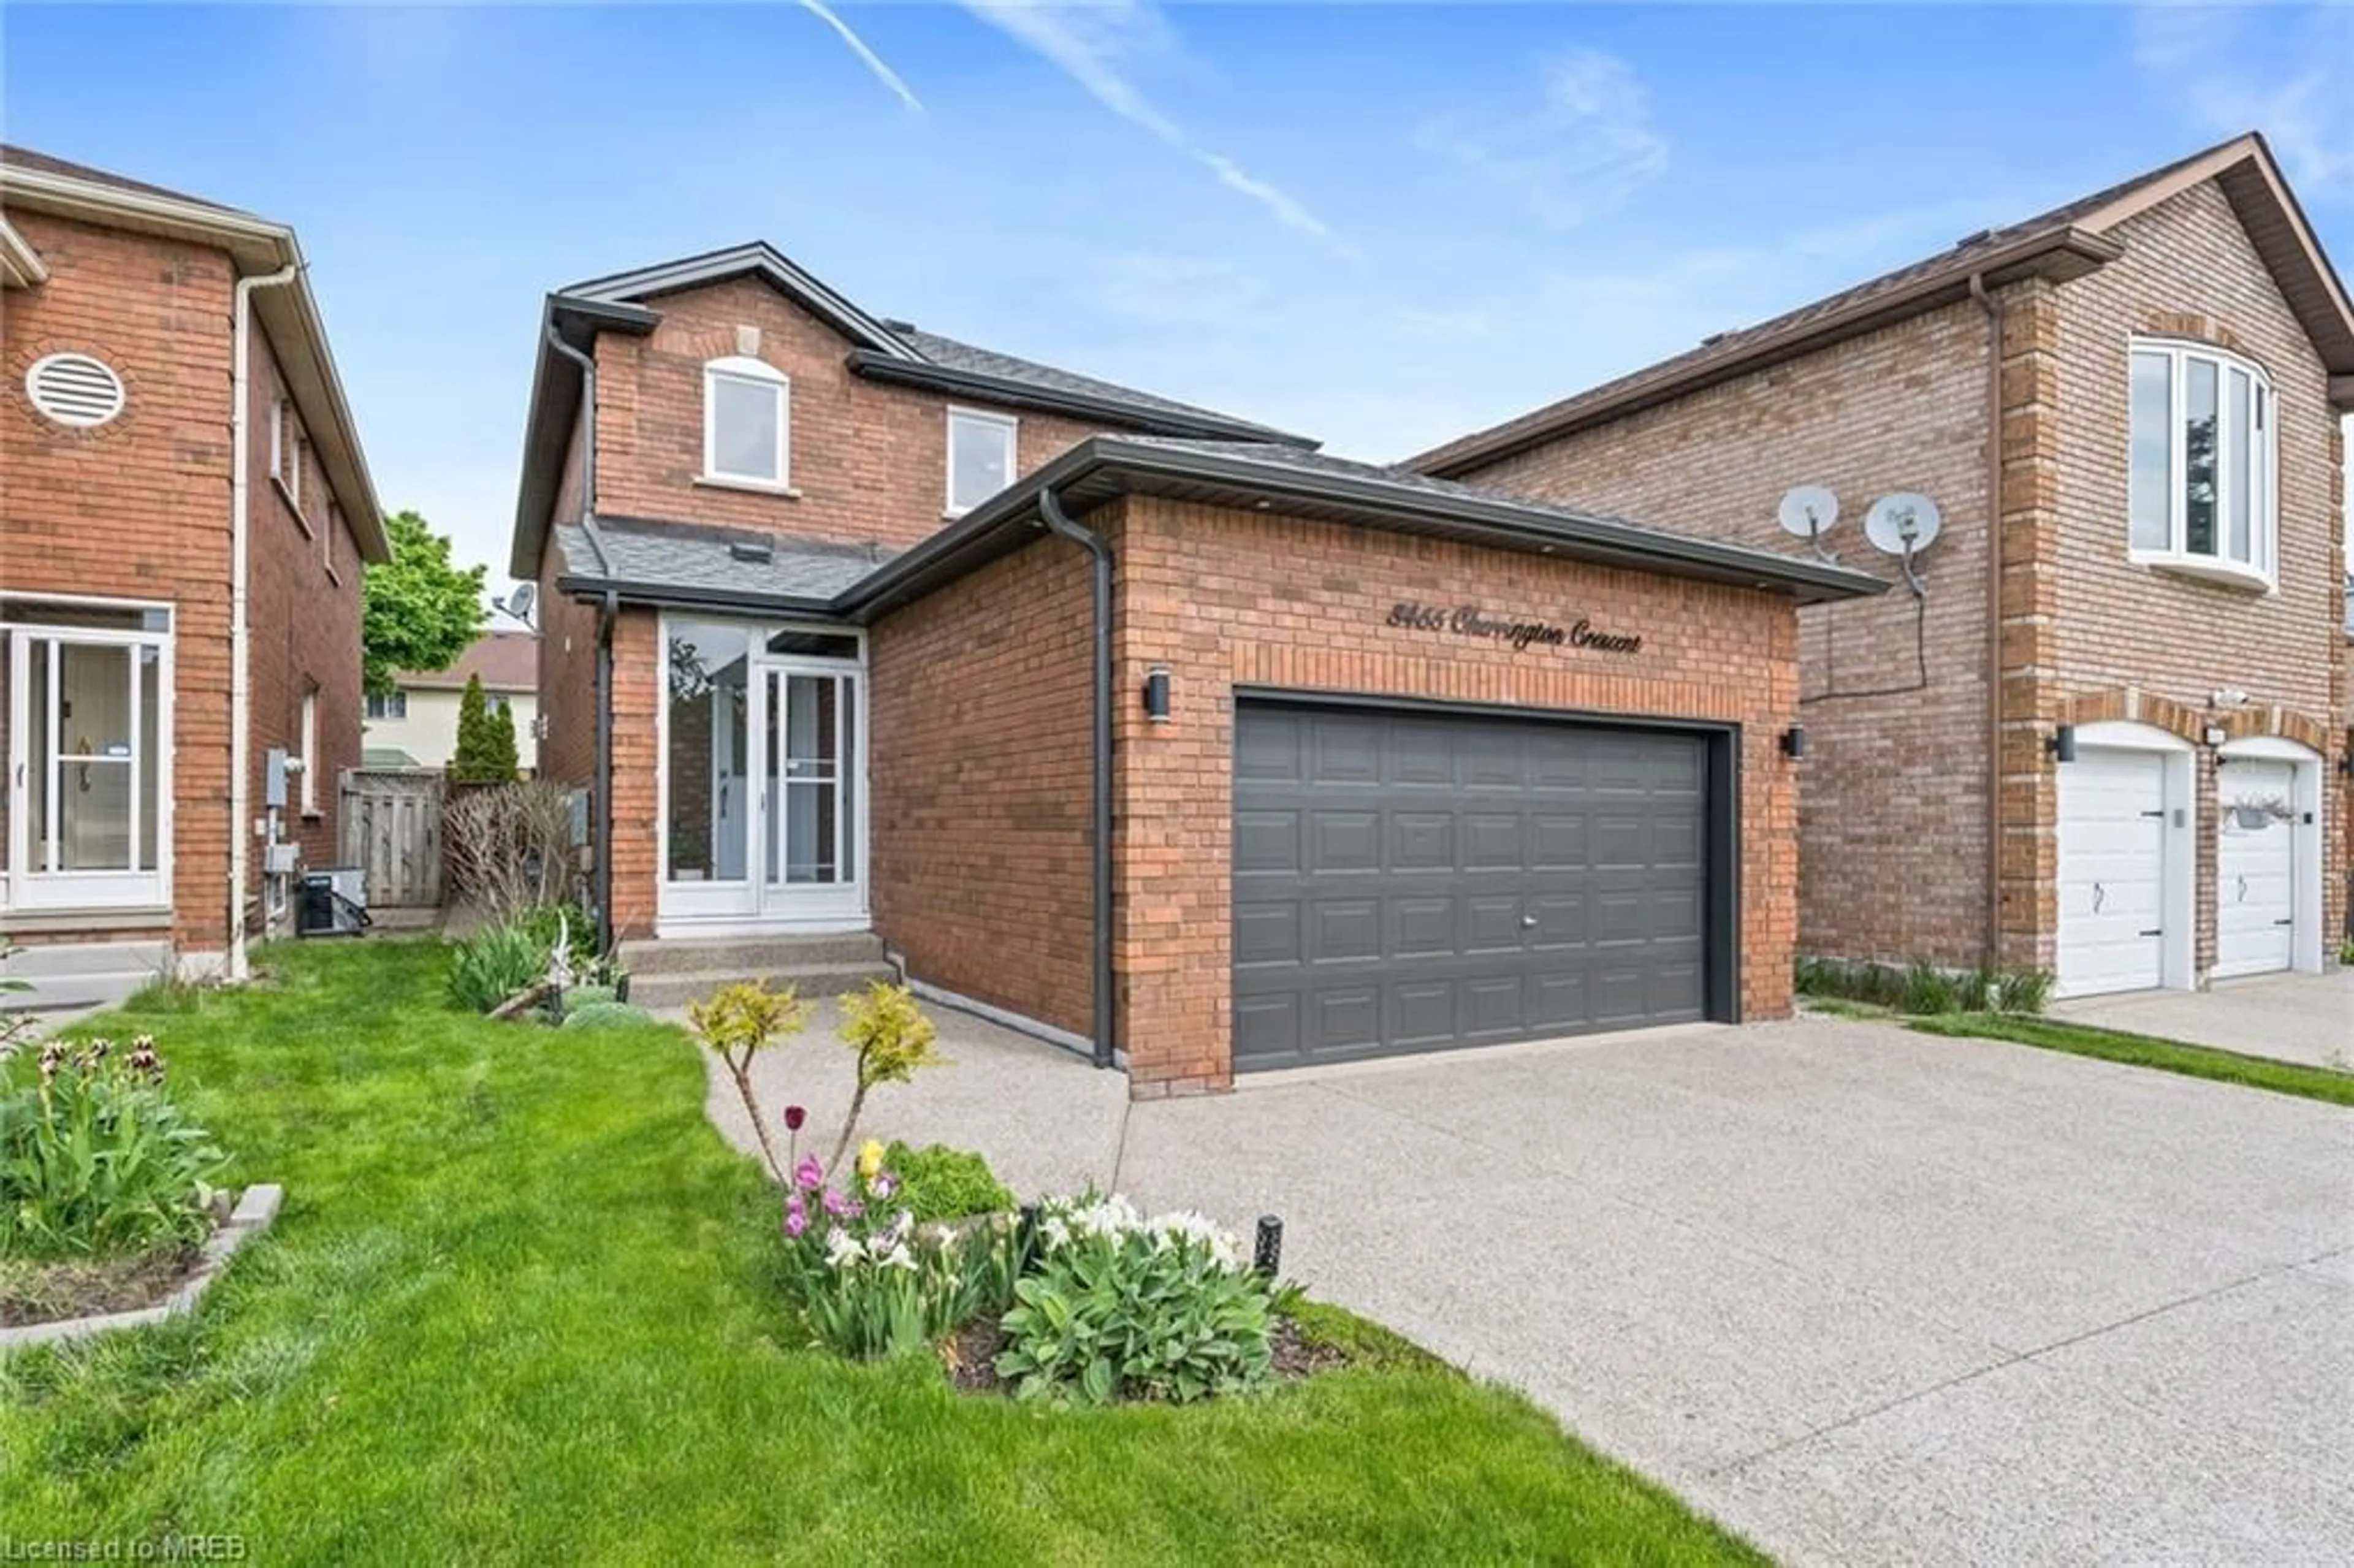 Home with brick exterior material for 3455 Cherrington Cres, Mississauga Ontario L5L 5B9